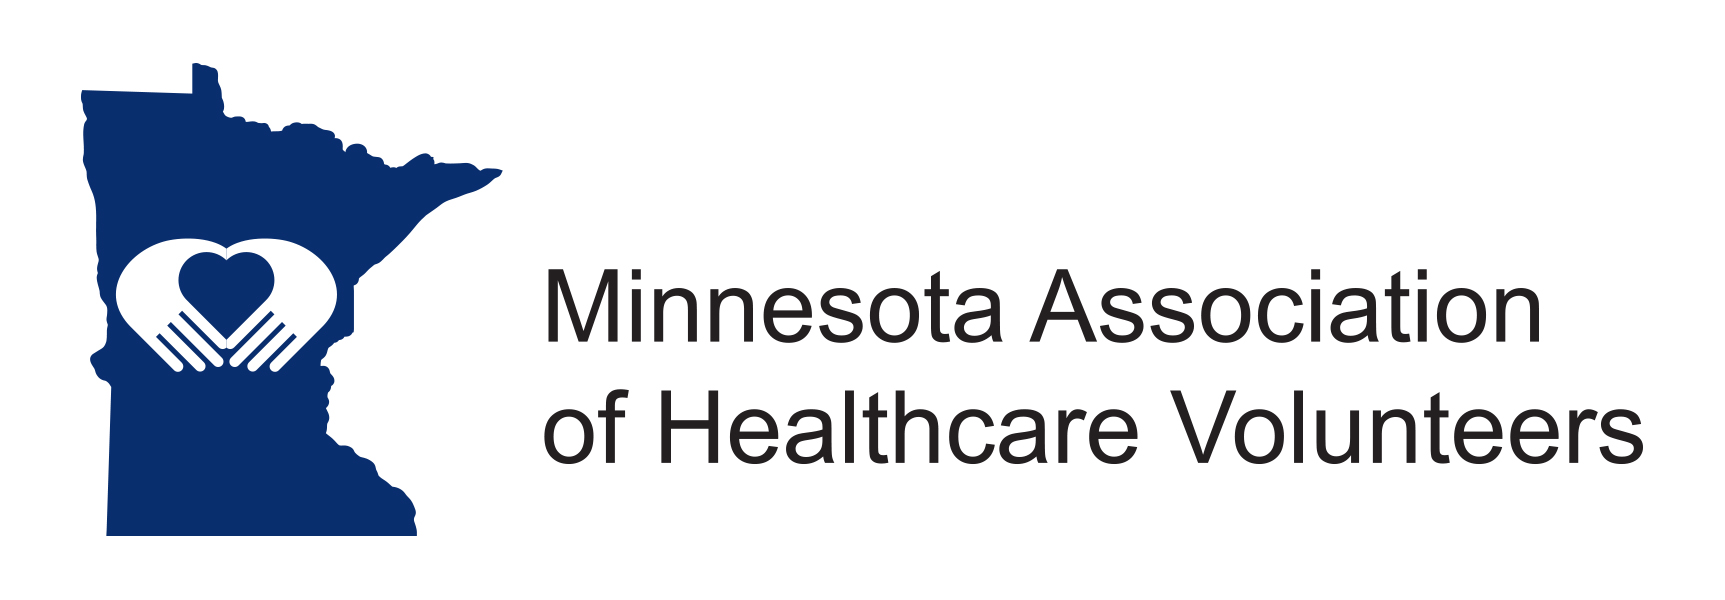 Minnesota Association of Healthcare Volunteers